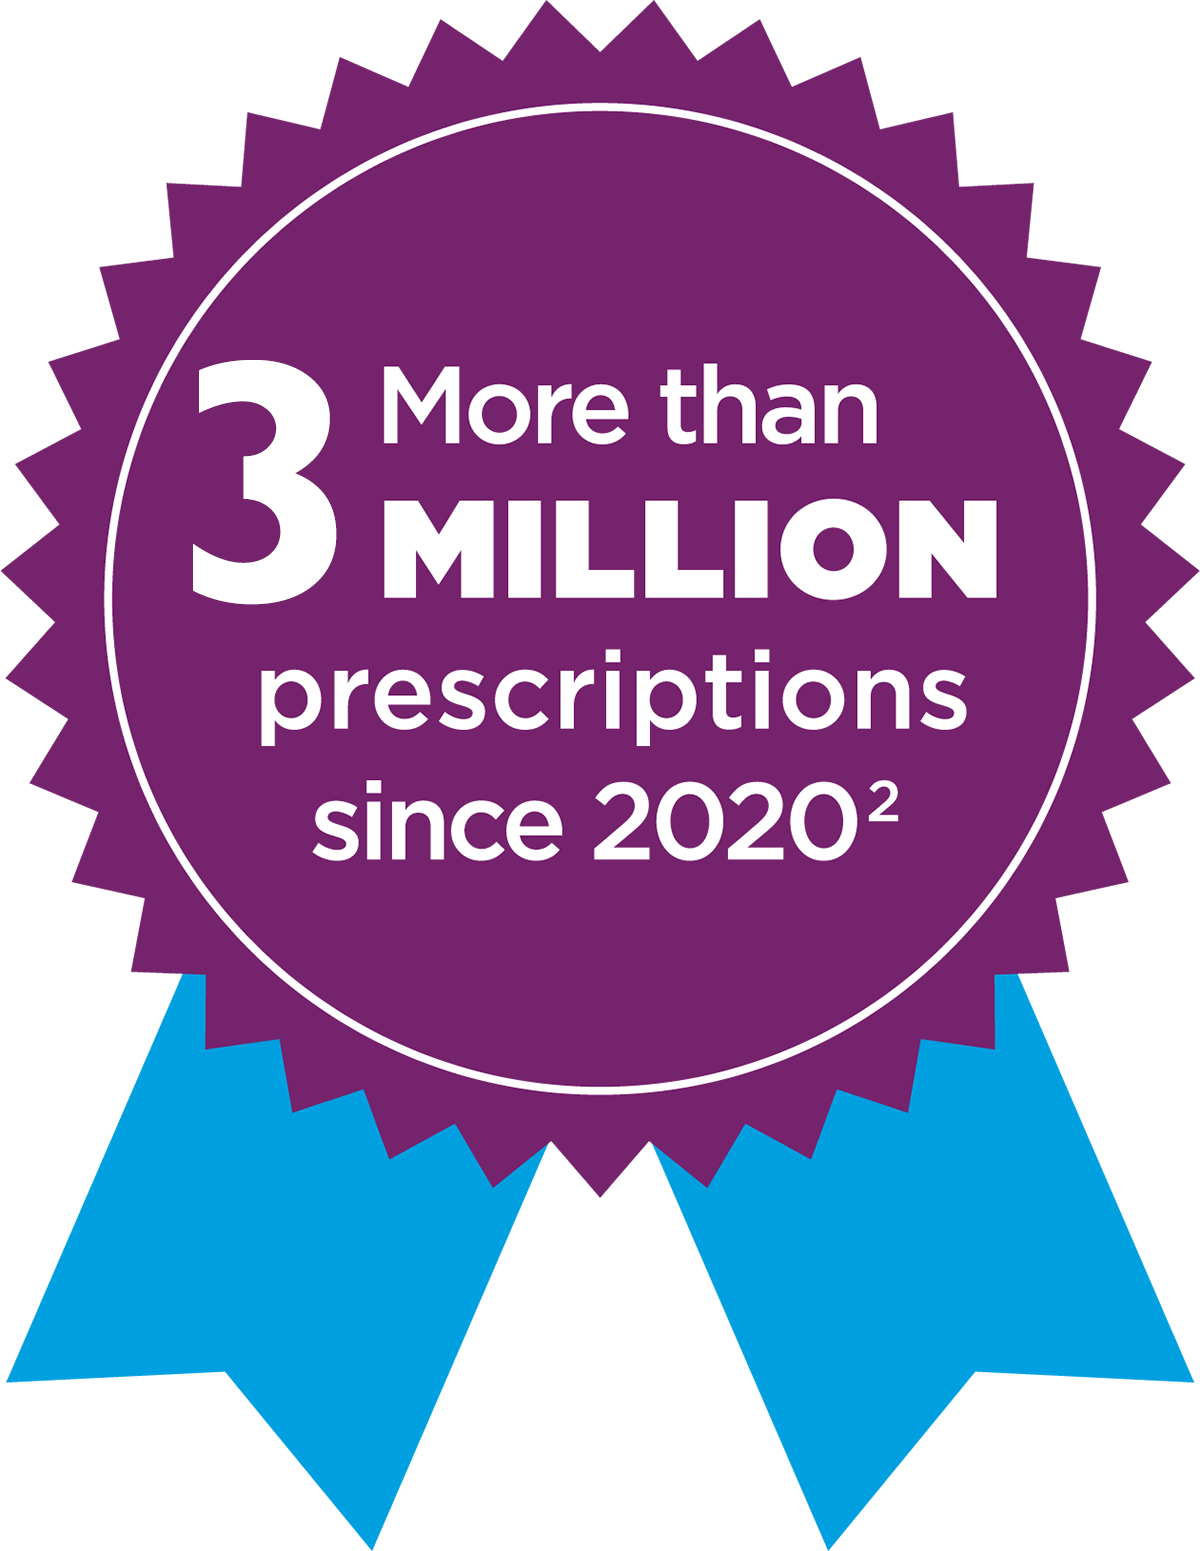 More than 3 Million prescriptions